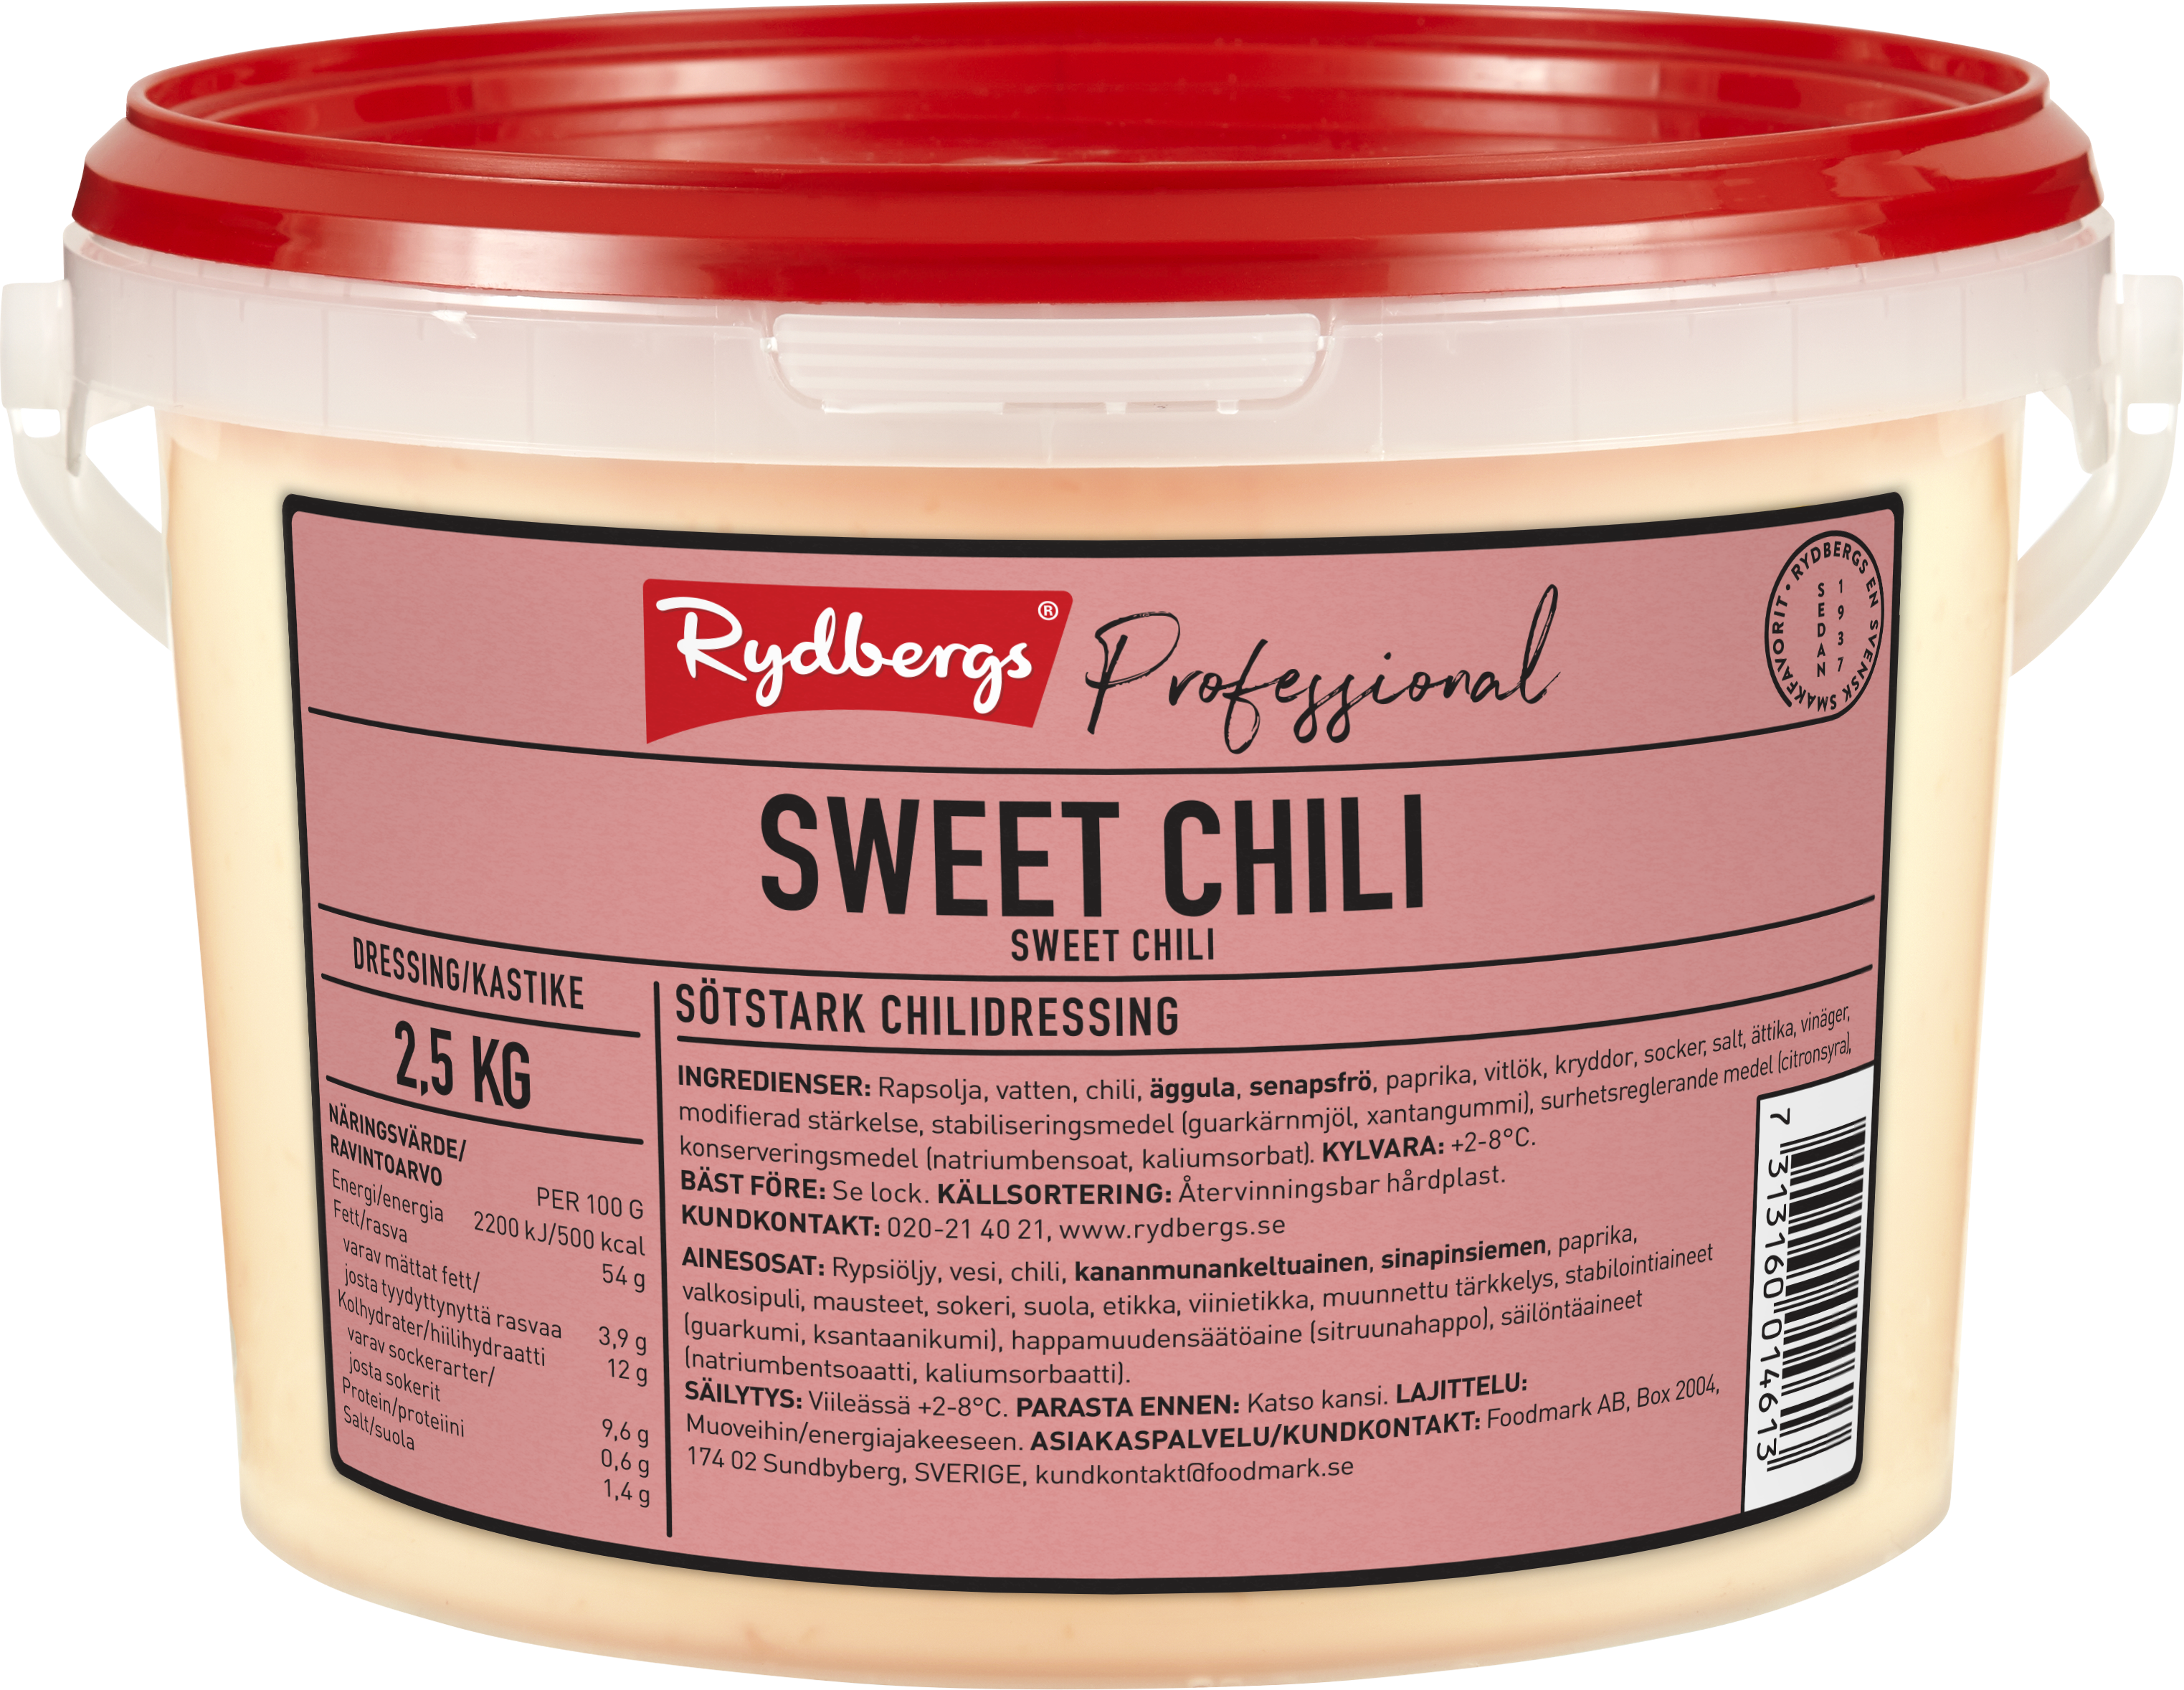 Rydbergs Sweet Chili -kastike 2,5 kg - 